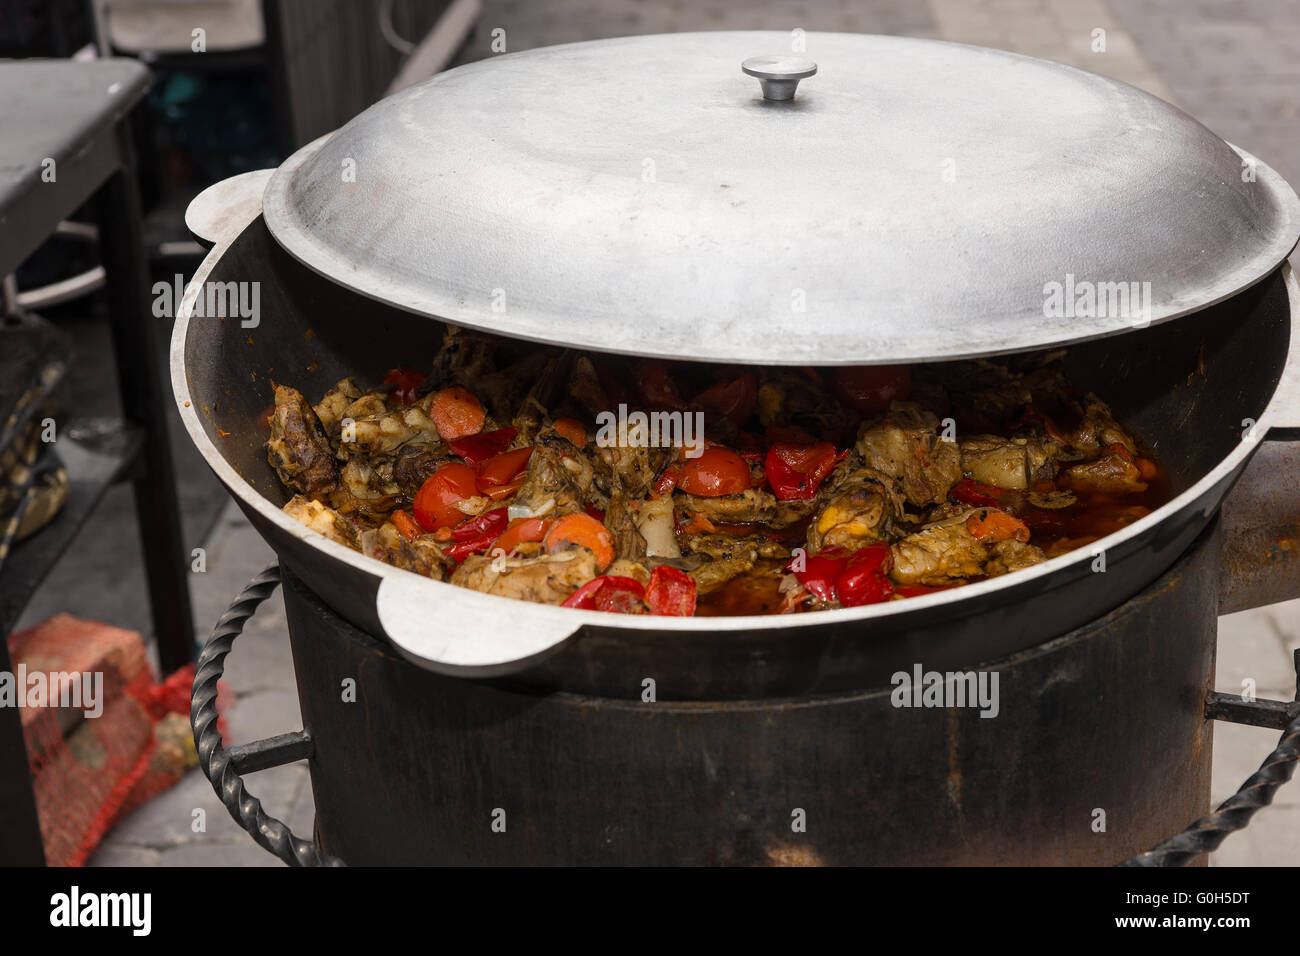 https://c8.alamy.com/comp/G0H5DT/large-cast-iron-pot-of-roasted-colorful-fresh-vegetables-standing-G0H5DT.jpg